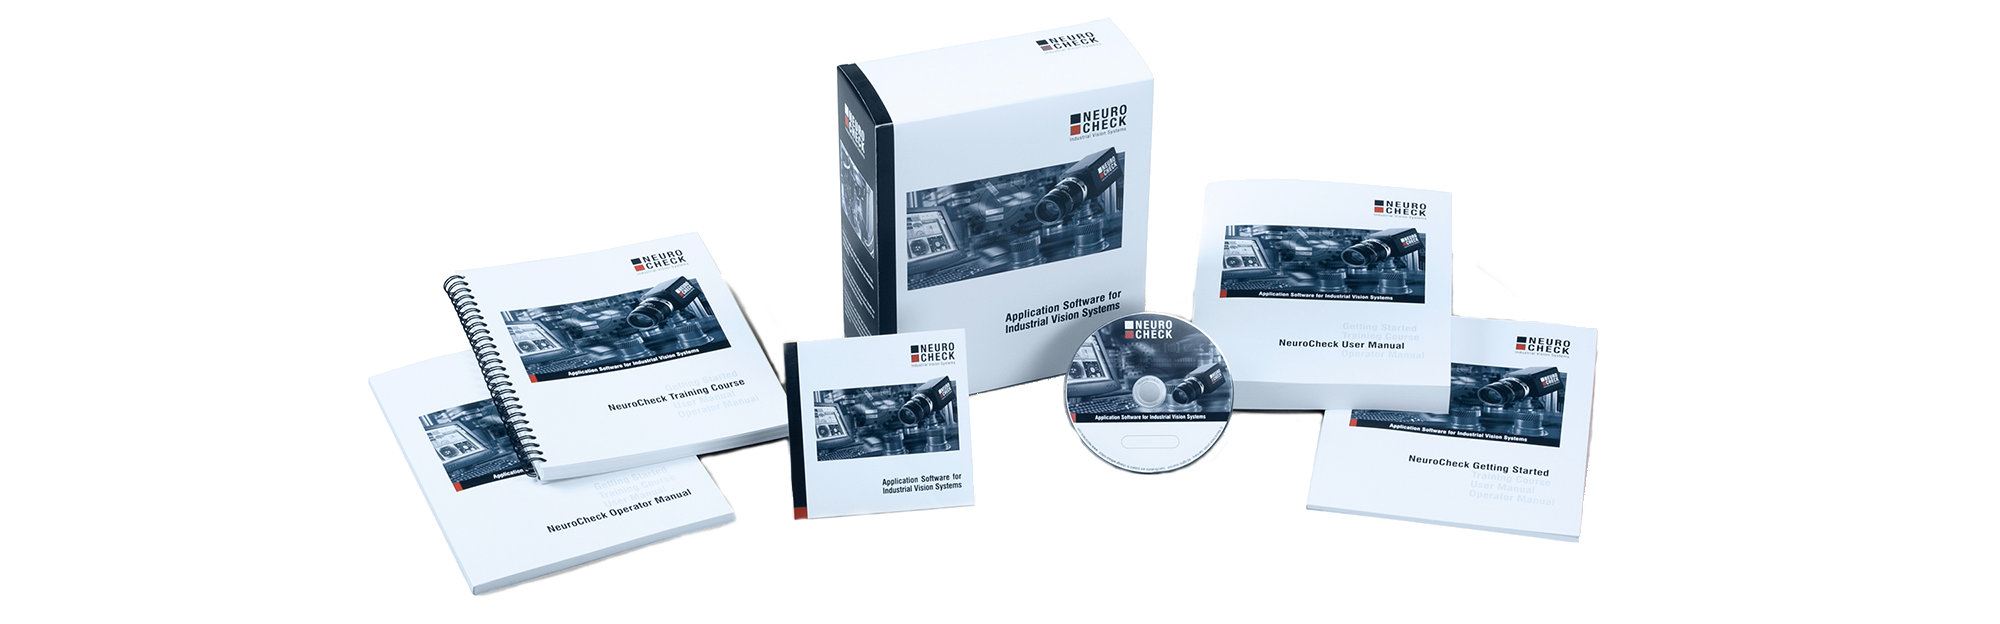 NeuroCheck industrielle Bildverarbeitungssoftware - Industrial Image Processing Software